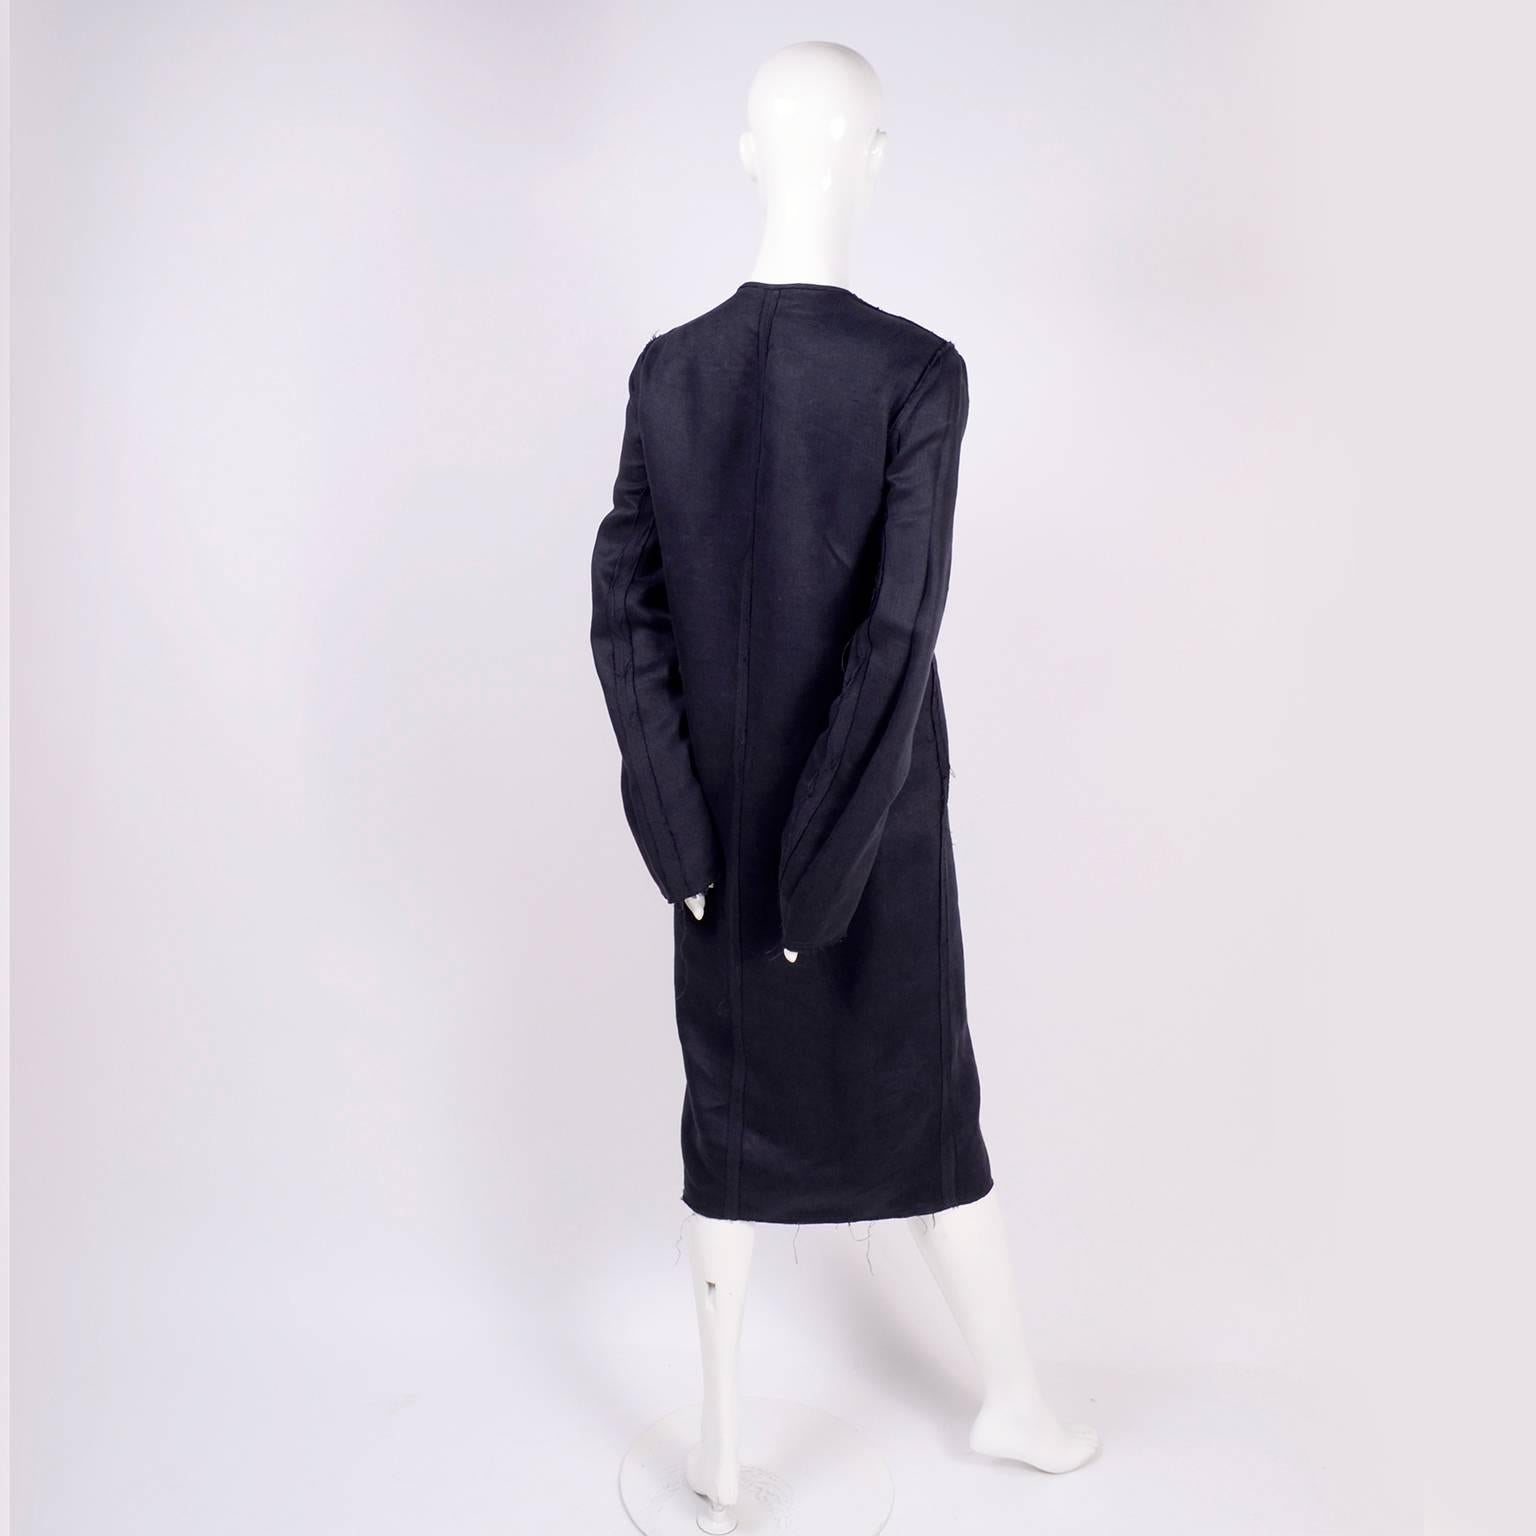 Lanvin Dress or Coat in Indigo Blue Linen w/ Exposed Seams & Raw Hem Alber Elbaz 2